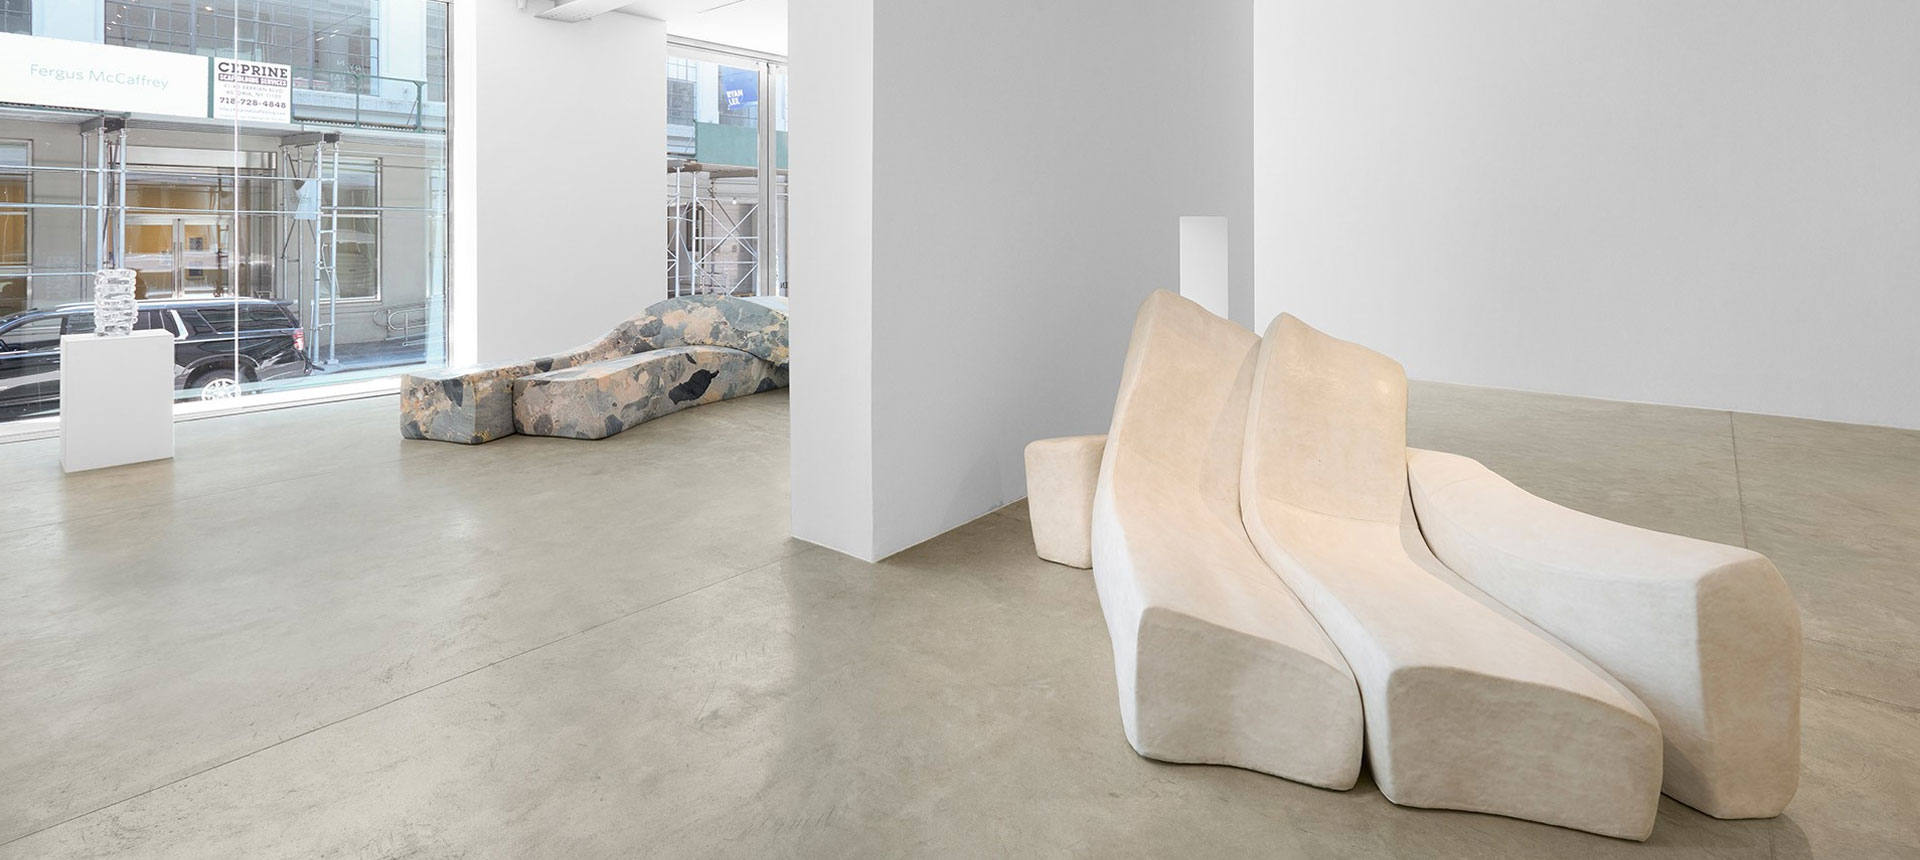 Najla El Zein’s sculptural work explores material liminality